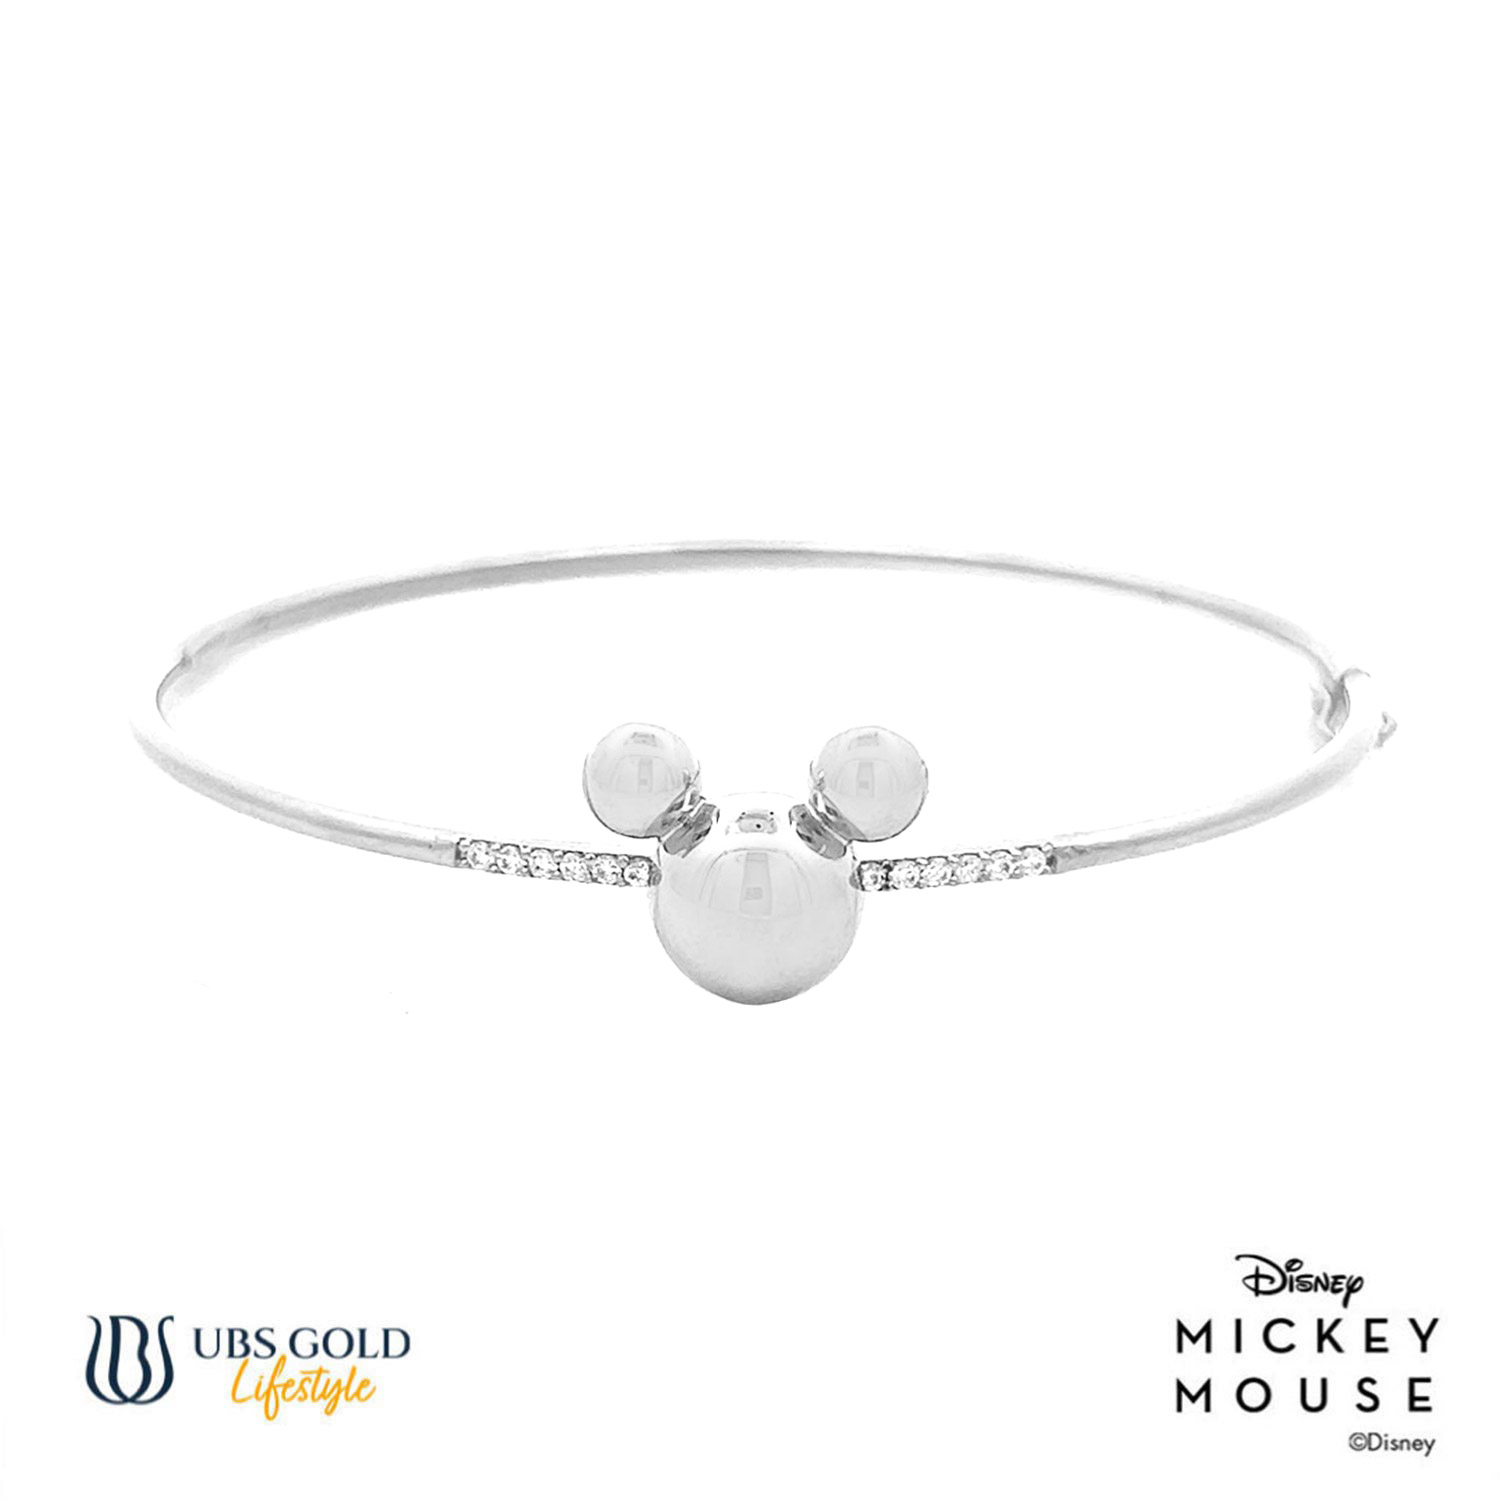 UBS Gold Gelang Emas Disney Mickey Mouse - Vgy0147 - 17K